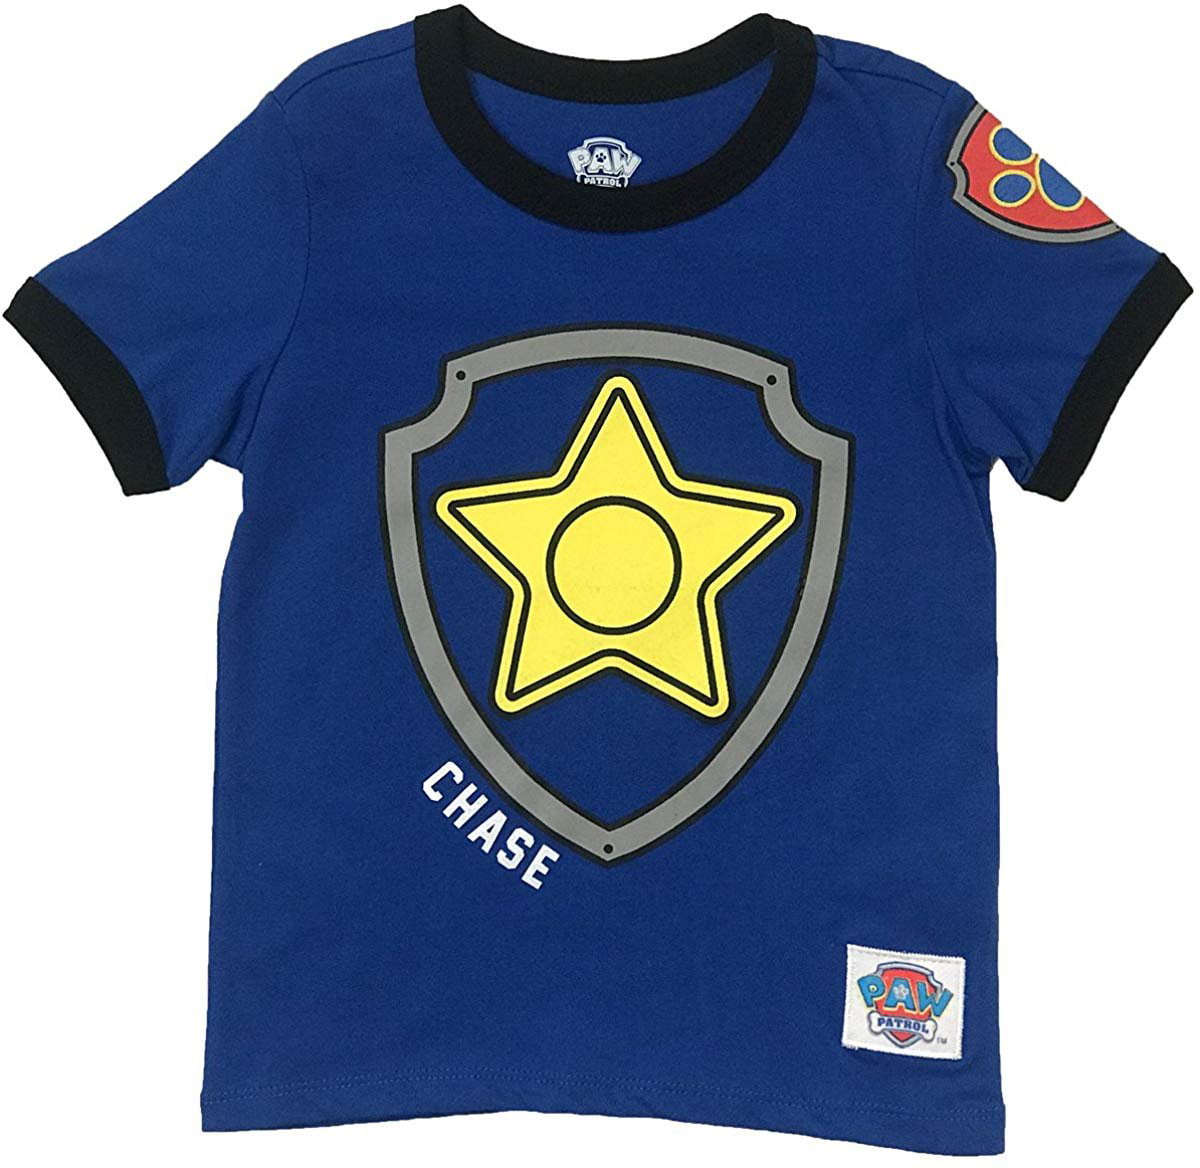 Chase personnages Marshall 2-8 ans Original Paw Patrol Nickelodeon T-shirt à manches courtes pour garçon 100% coton